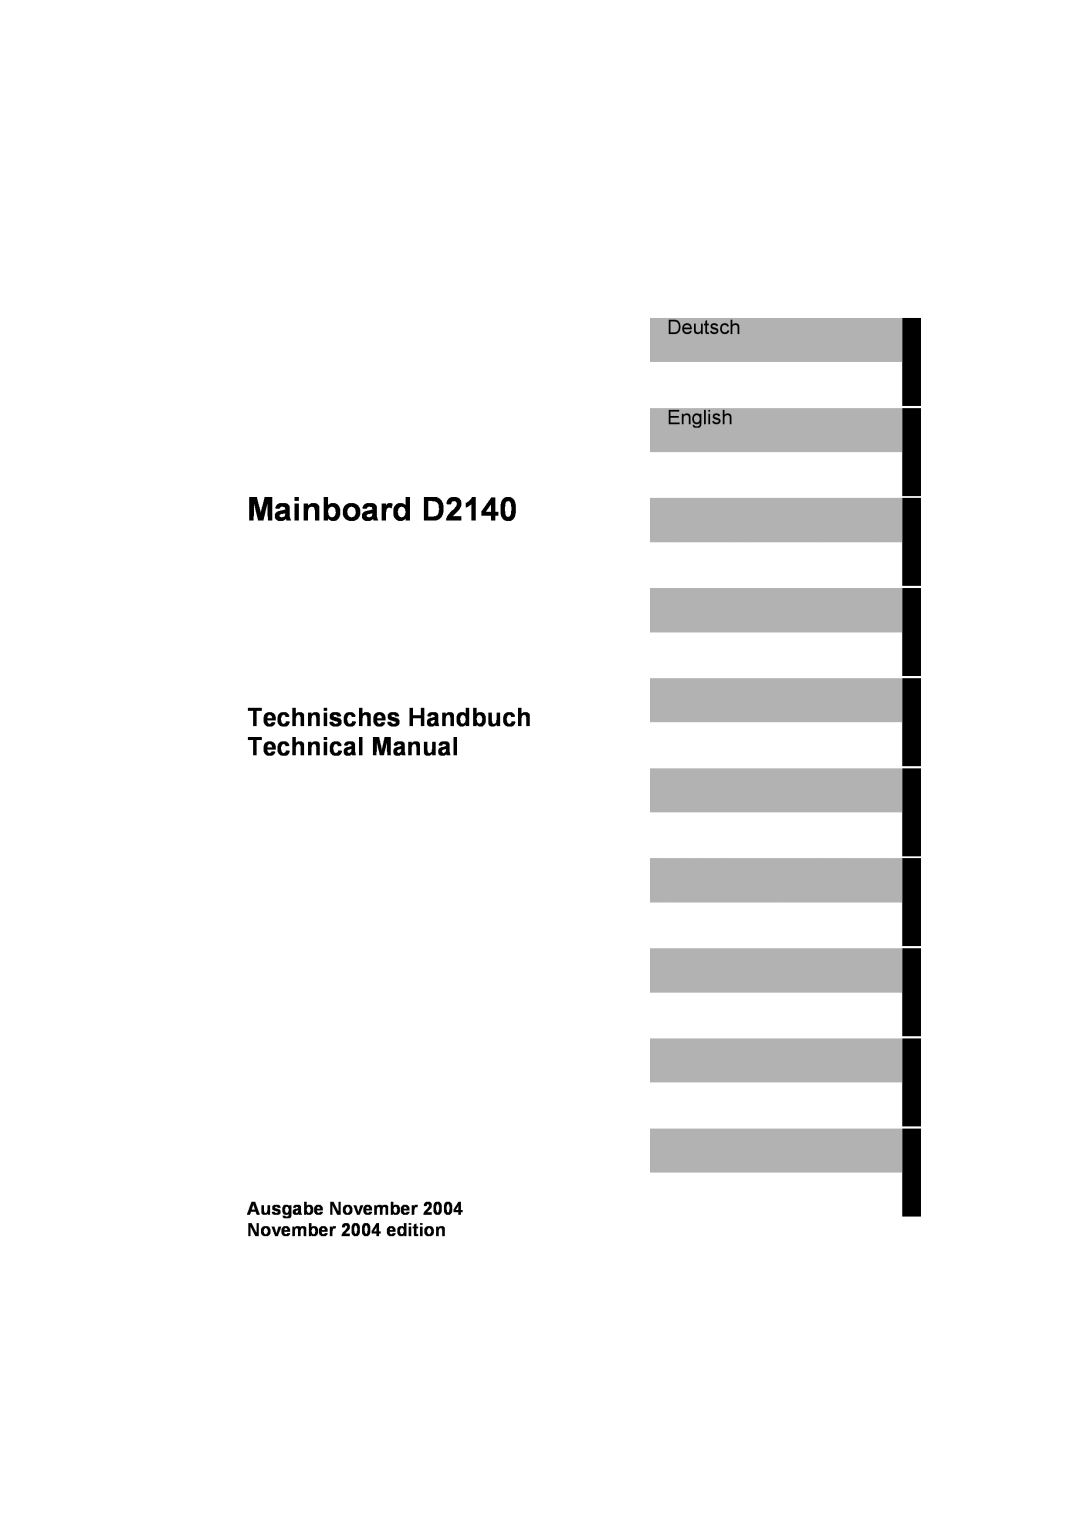 Eclipse - Fujitsu Ten technical manual Mainboard D2140, Technisches Handbuch Technical Manual, Deutsch English 